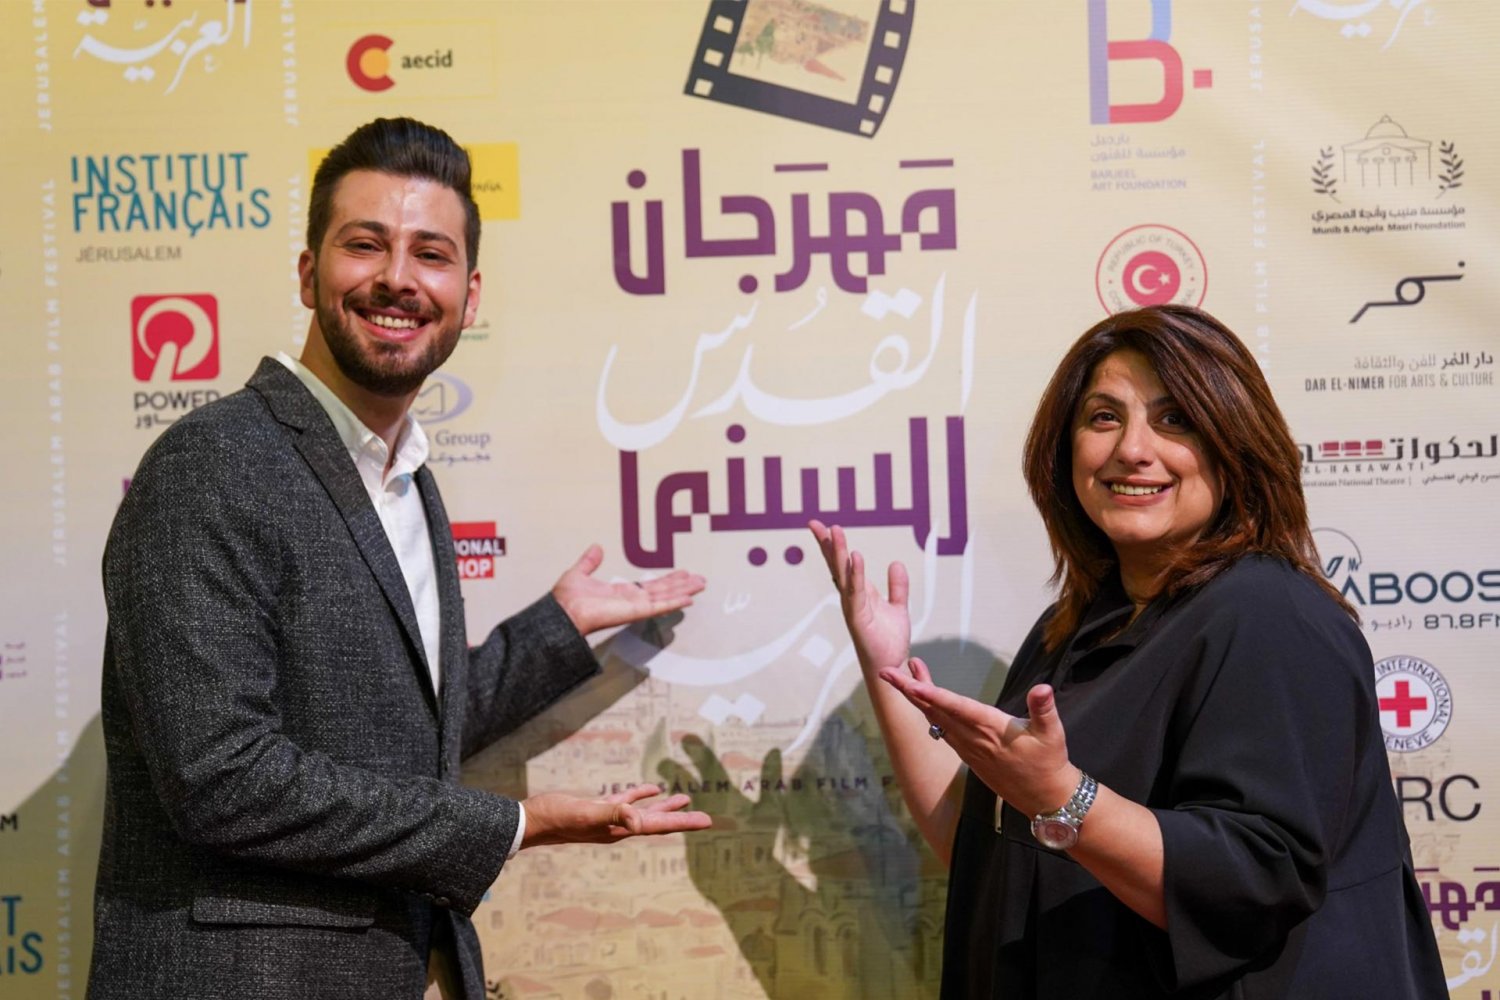 Jerusalem Arab Film Festival organizers